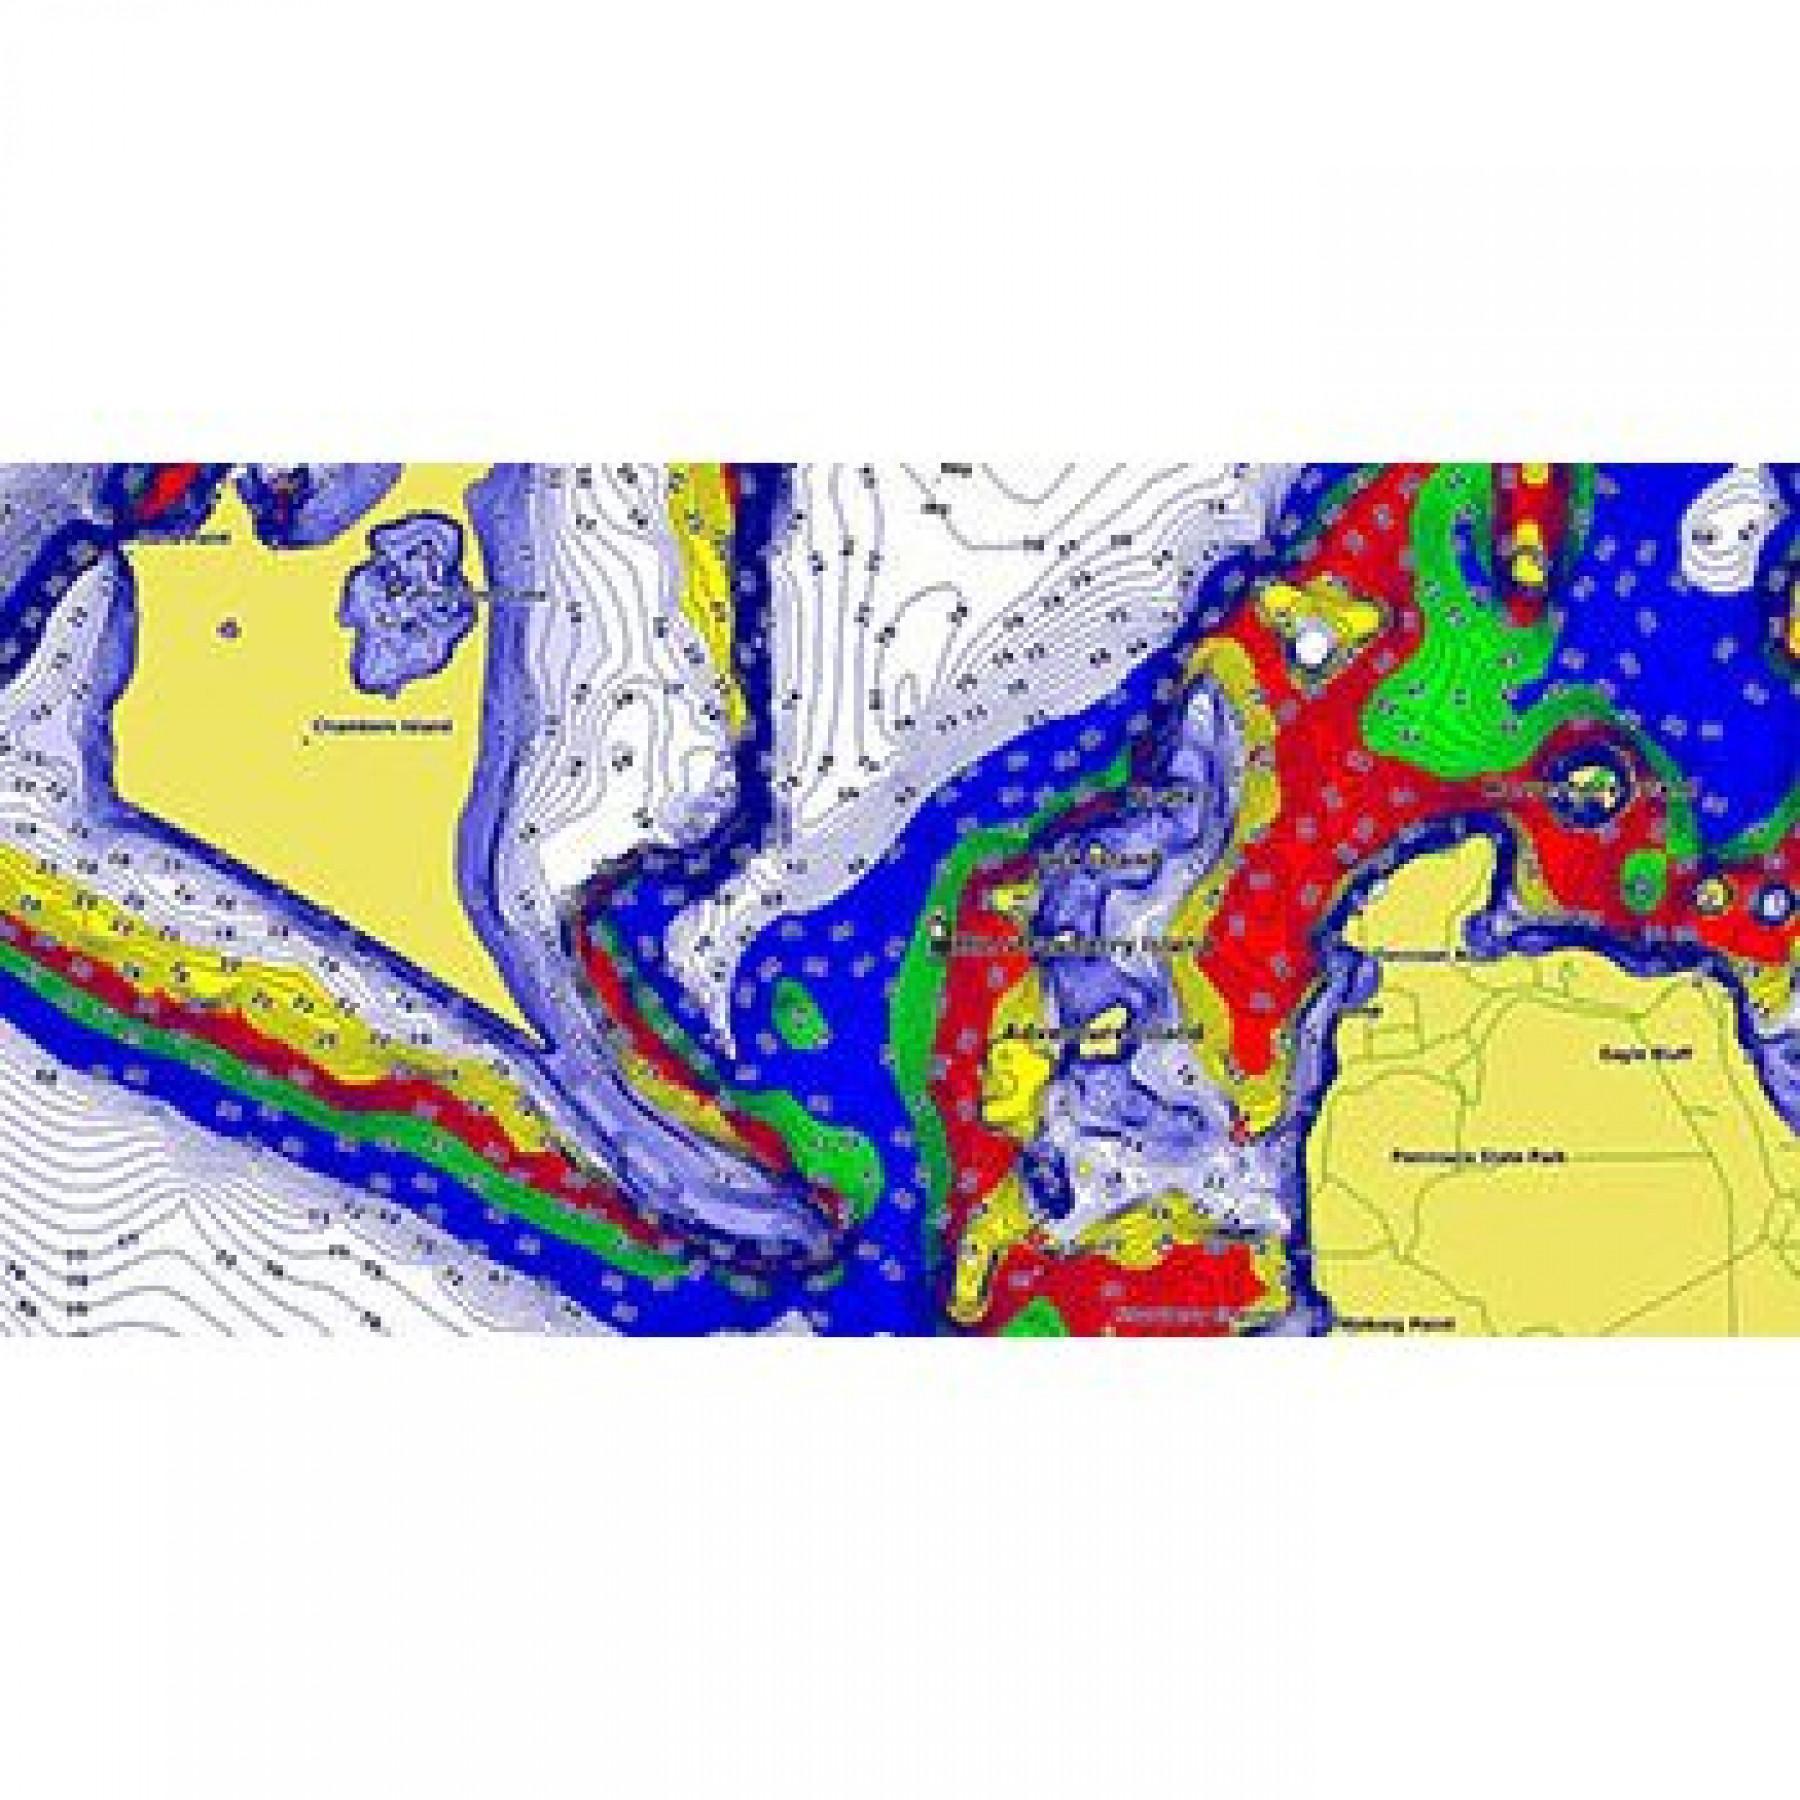 Karte Garmin BlueChart g3 hxeu018r-benelux offshore & inland